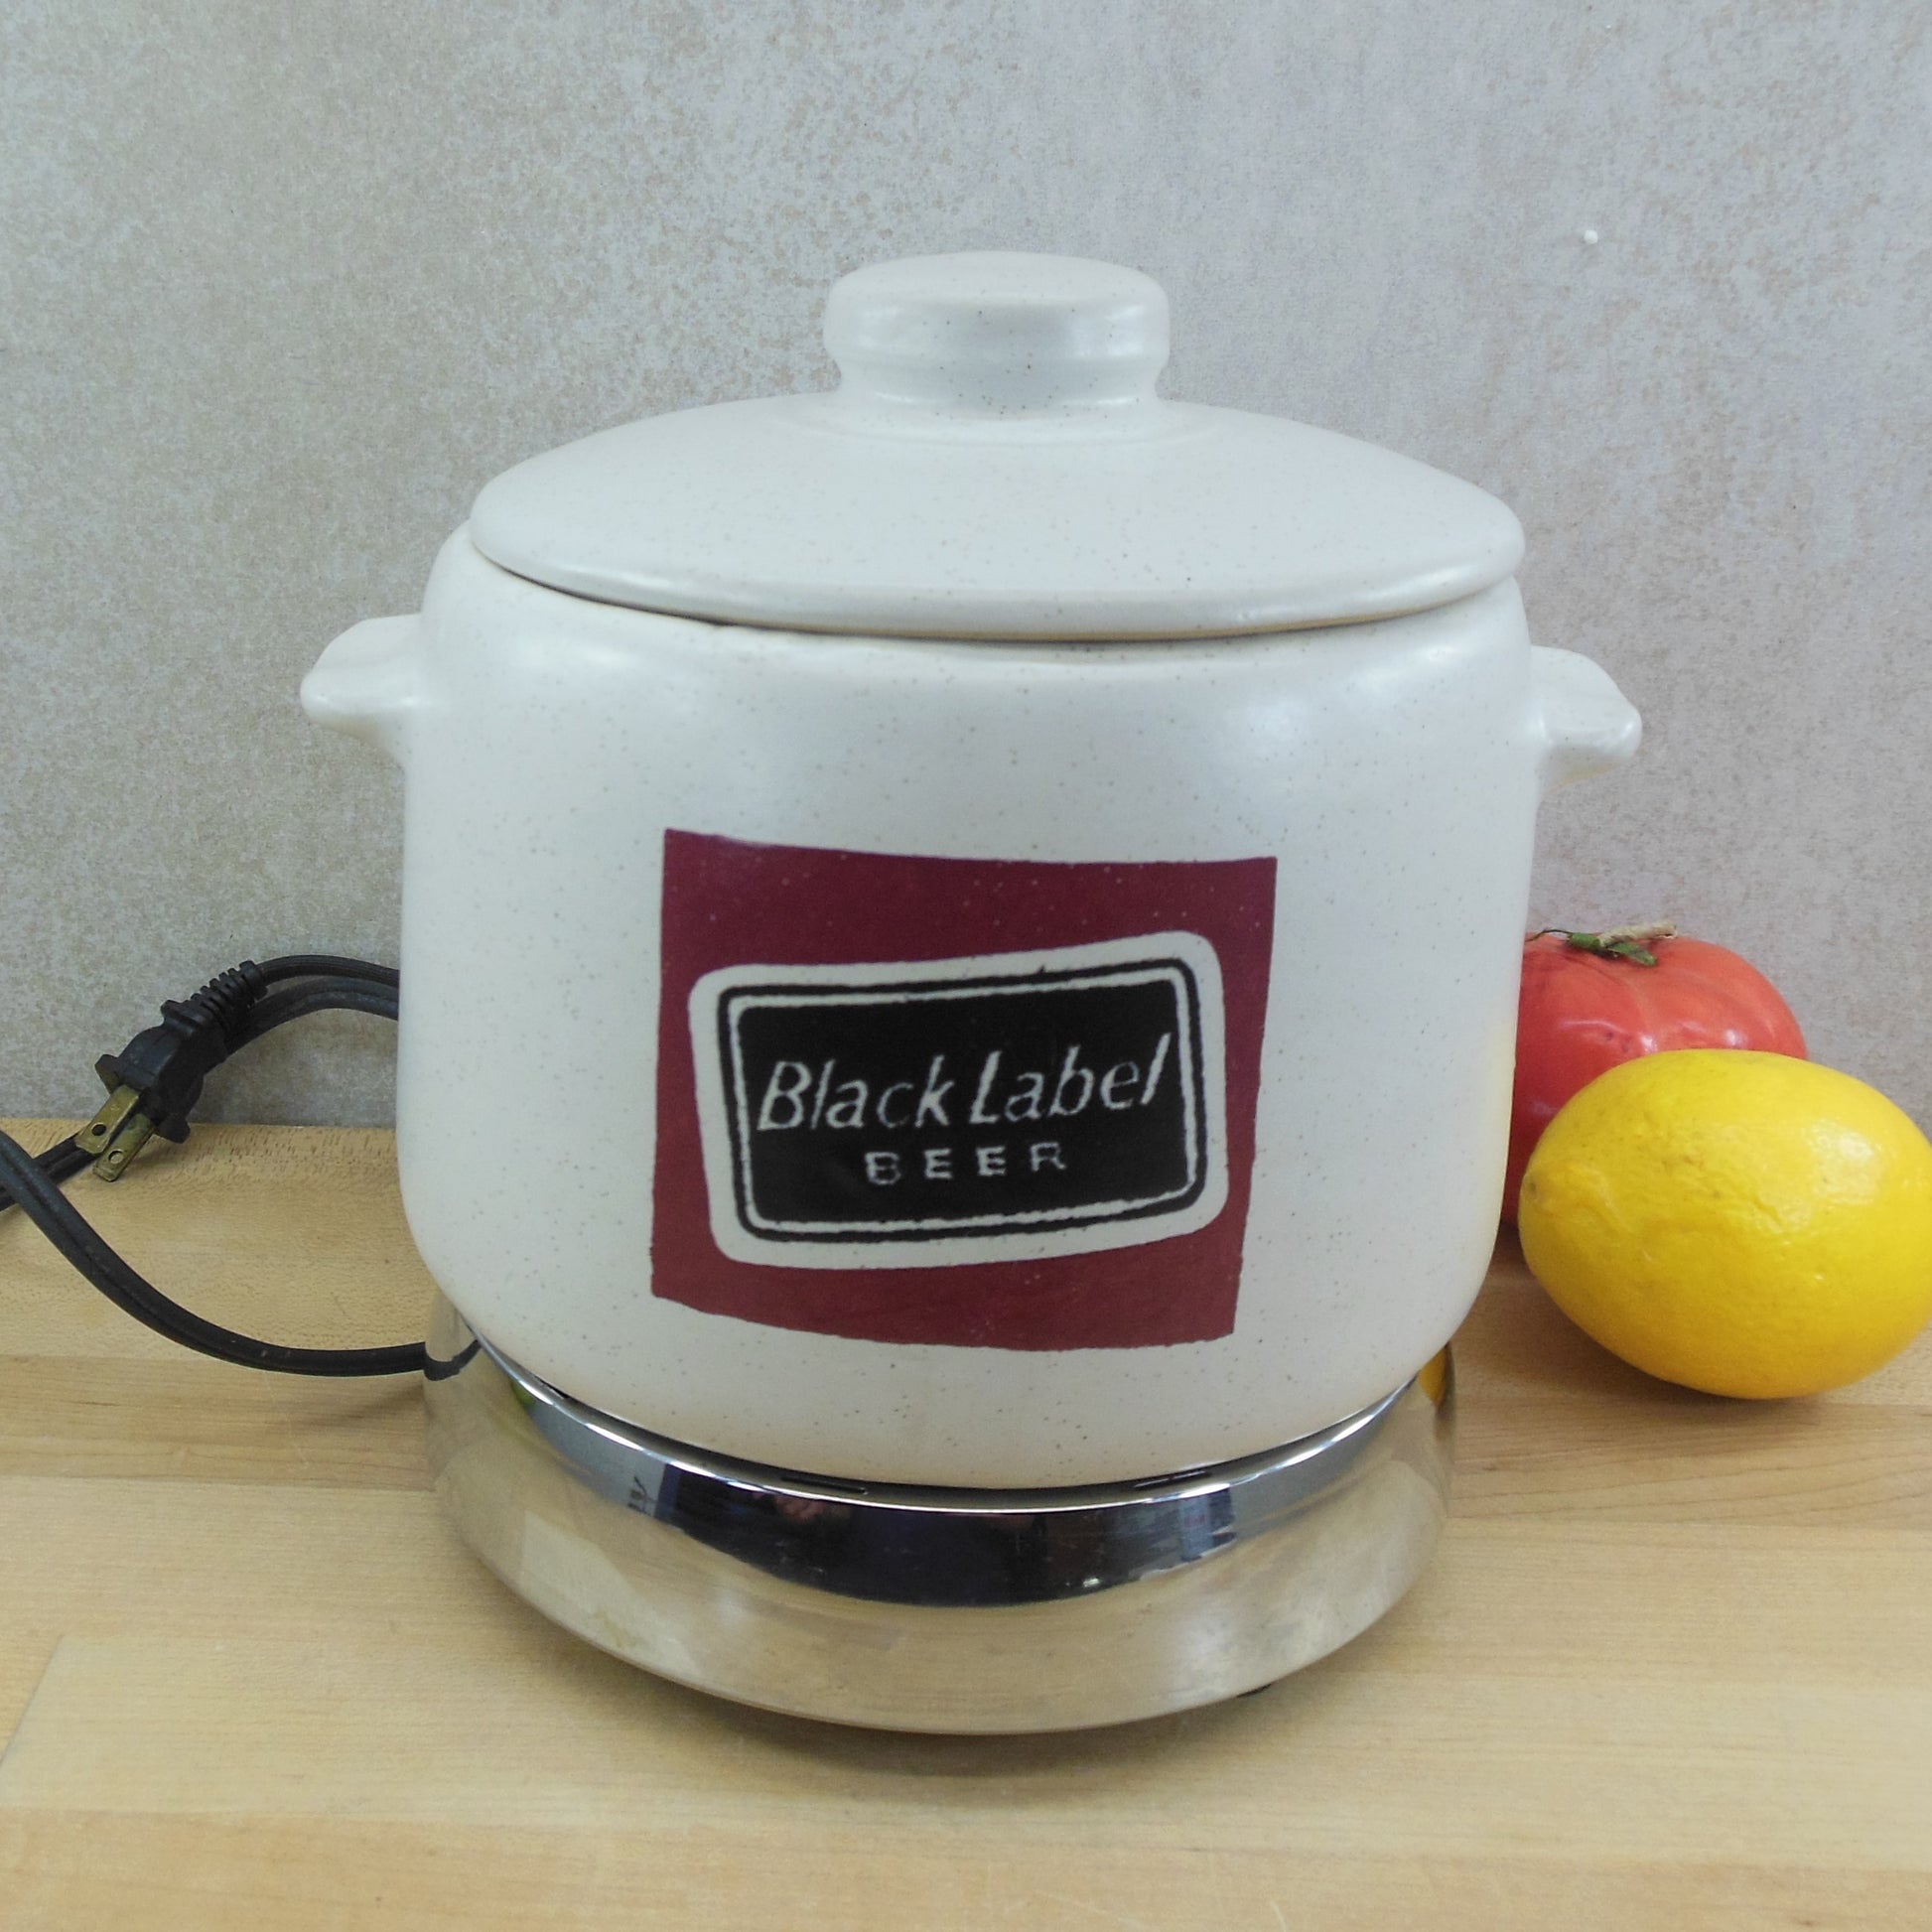 Vintage Crock Pot Electric Slow Cooker West Bend Electric 